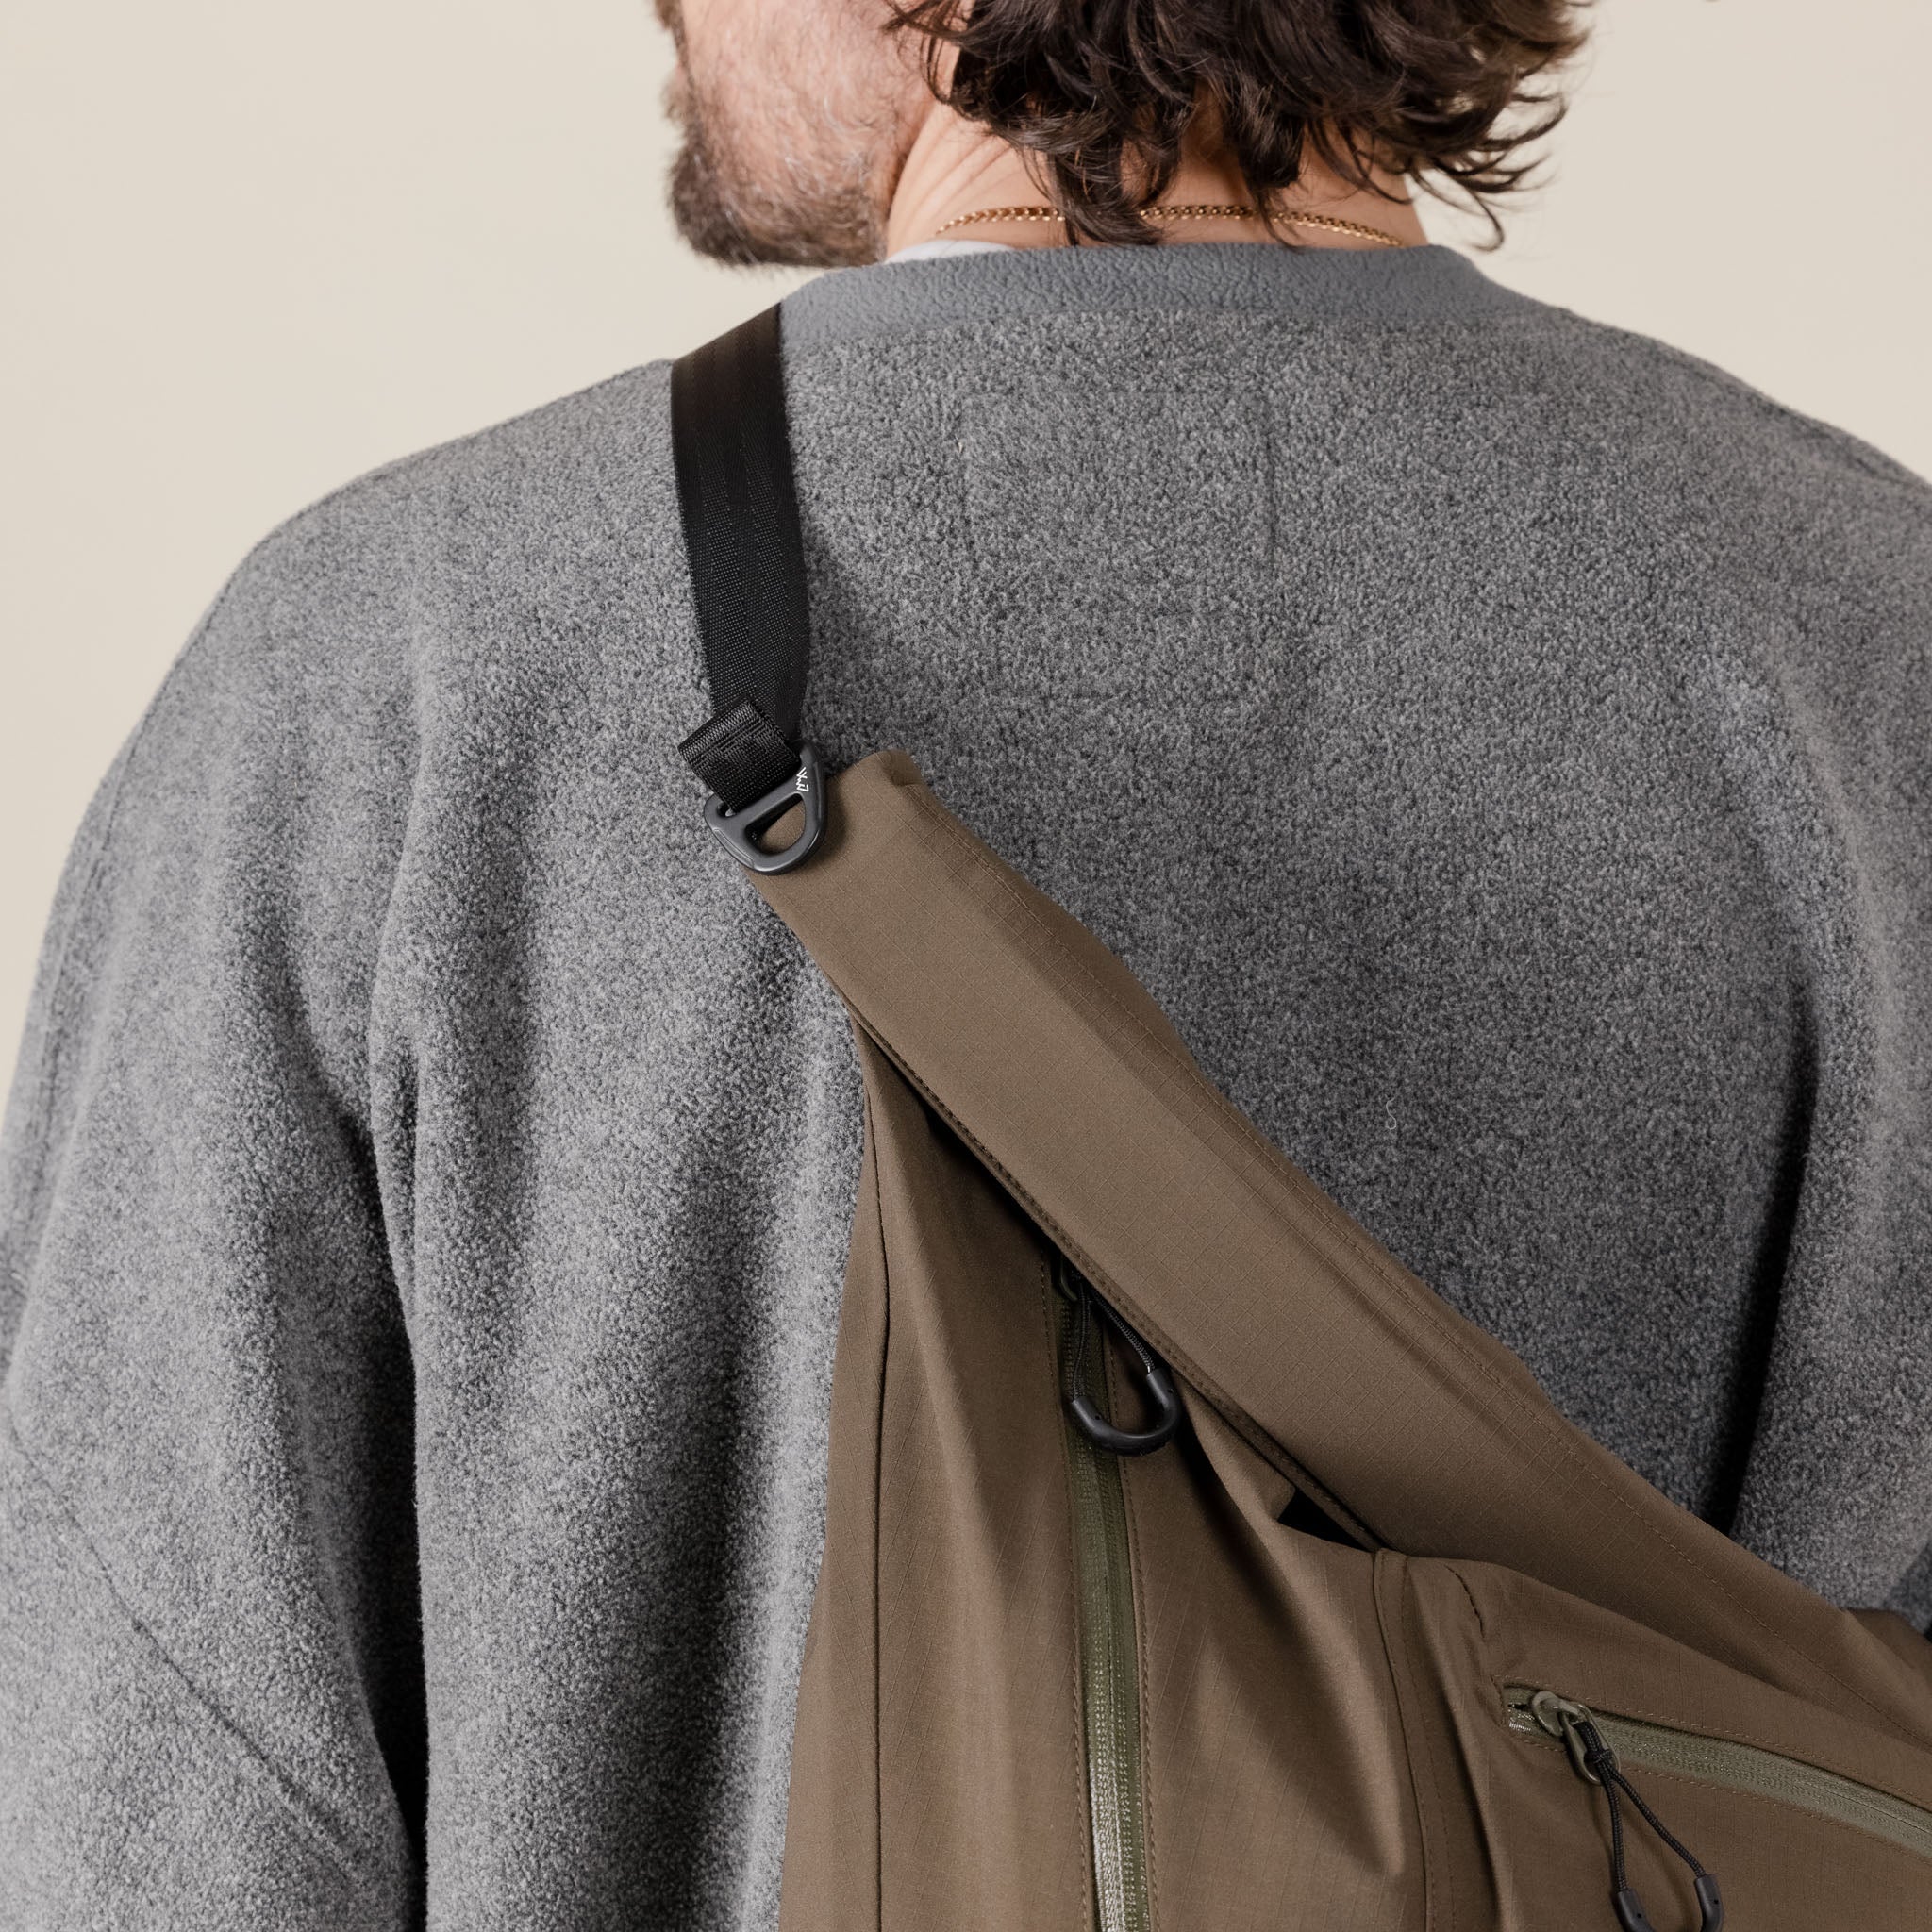 CMF Comfy Outdoor Garment - TTOO Exclusive - CMF Waterproof Roll Top Bag - Khaki Green